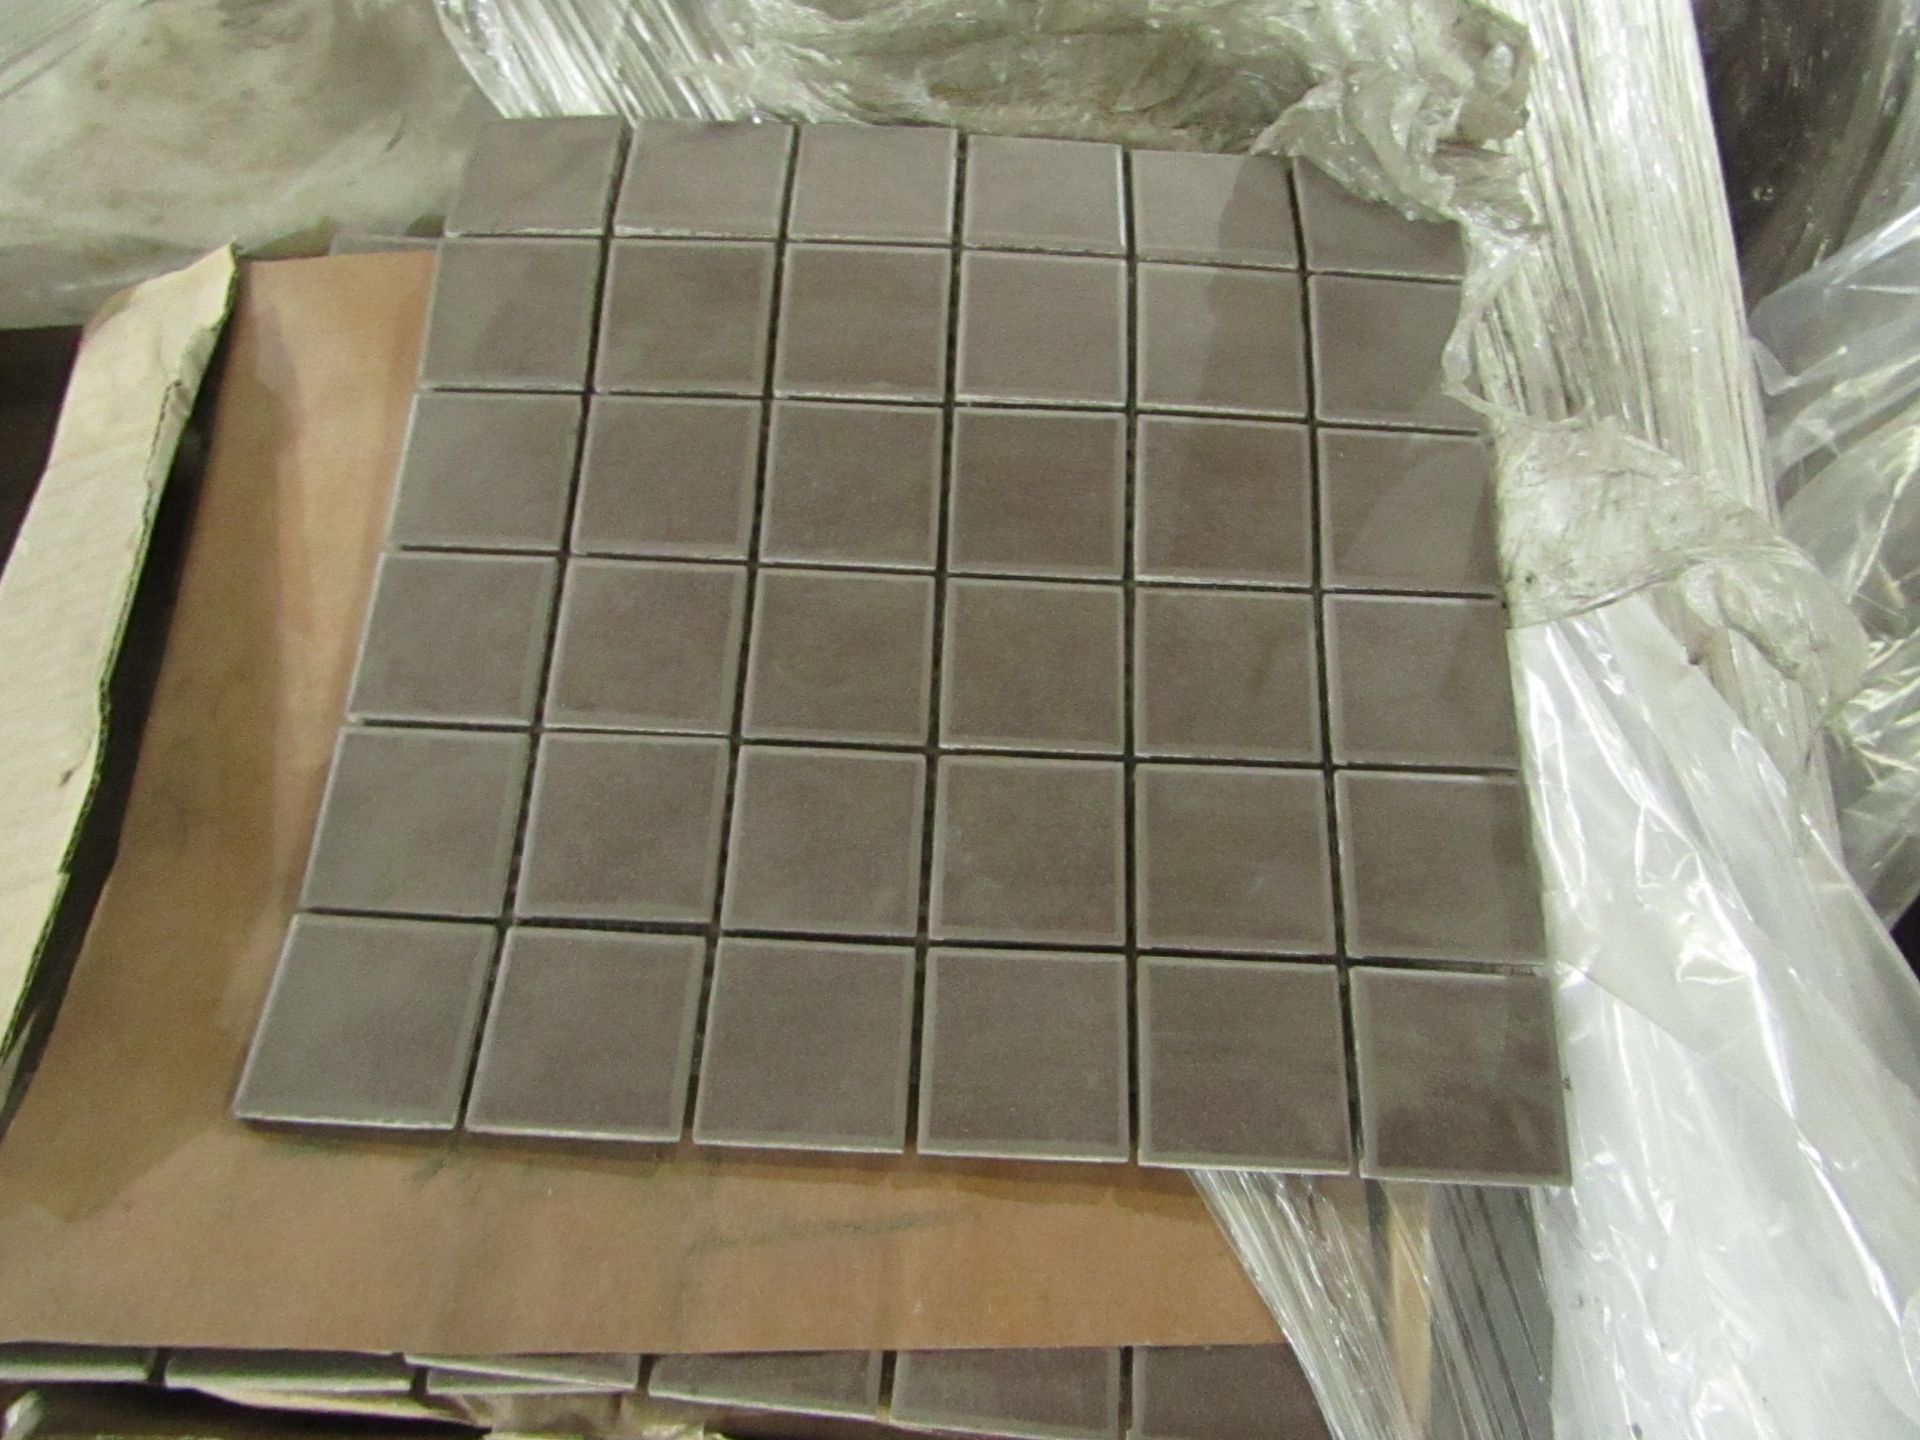 10x Boxes of 12 Vitra Sahara Mocha Mosaic 470x470mm tiles, brand new. Total RRP ?34.99 per box,